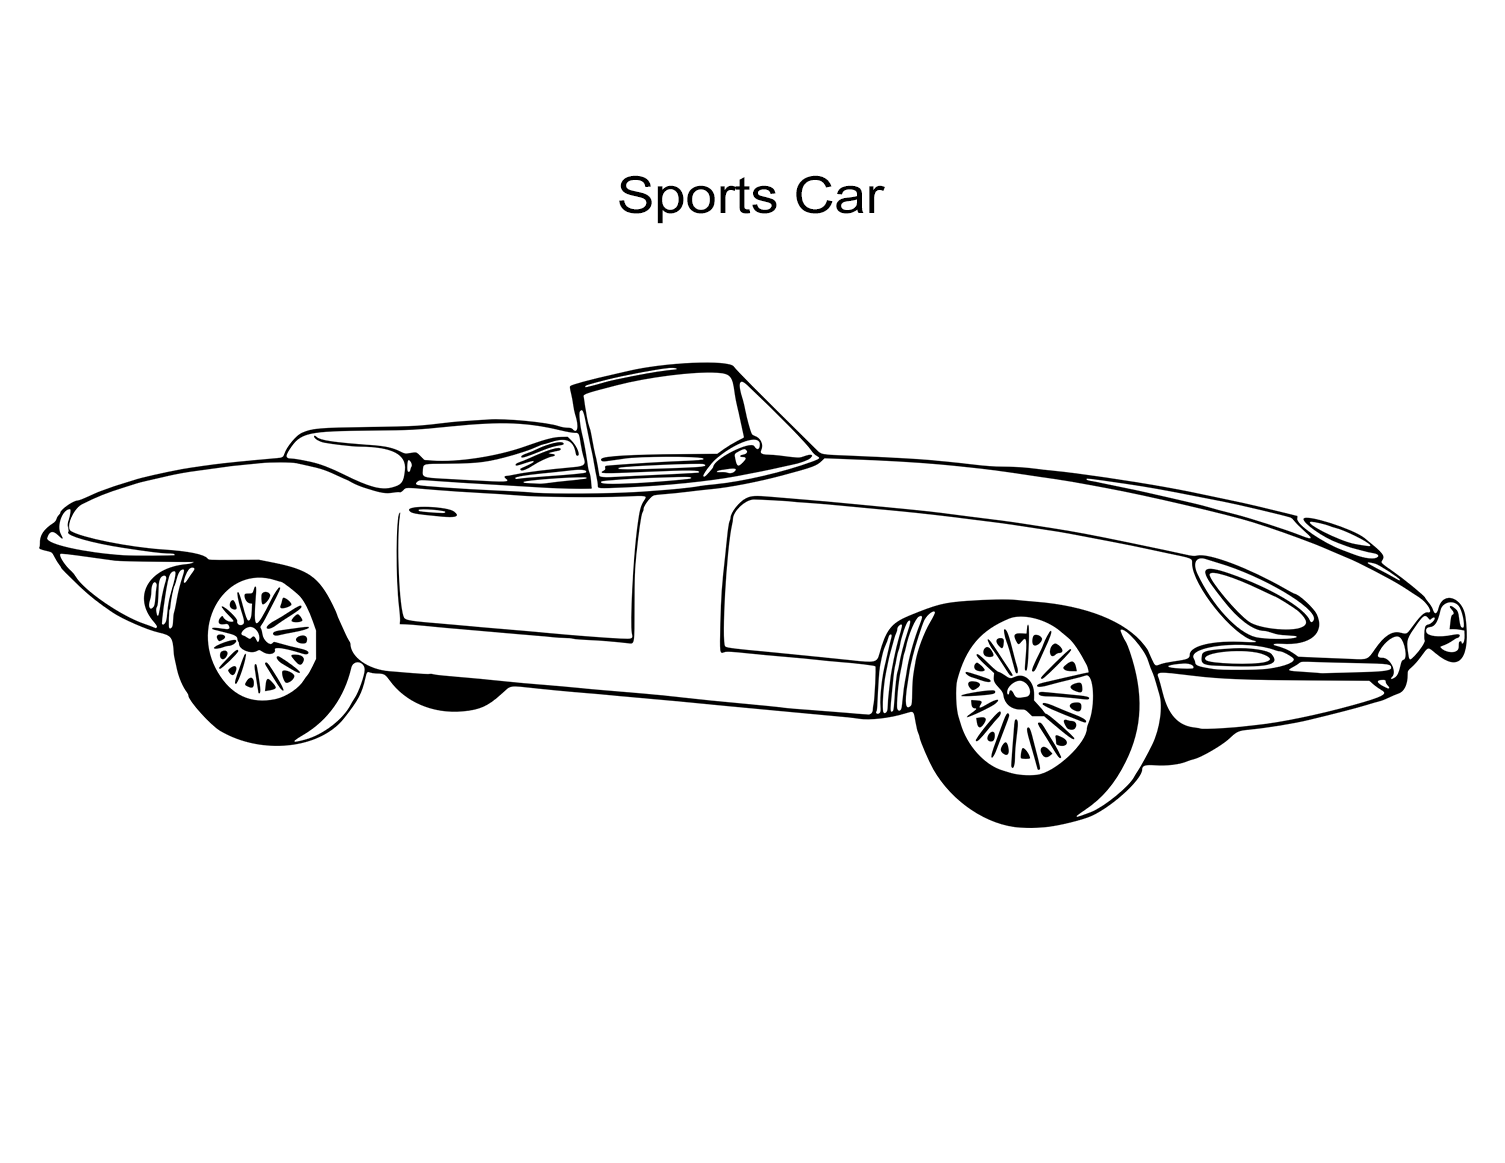 11+ Sports Car Coloring Pages - ColoringPages234 - ColoringPages234